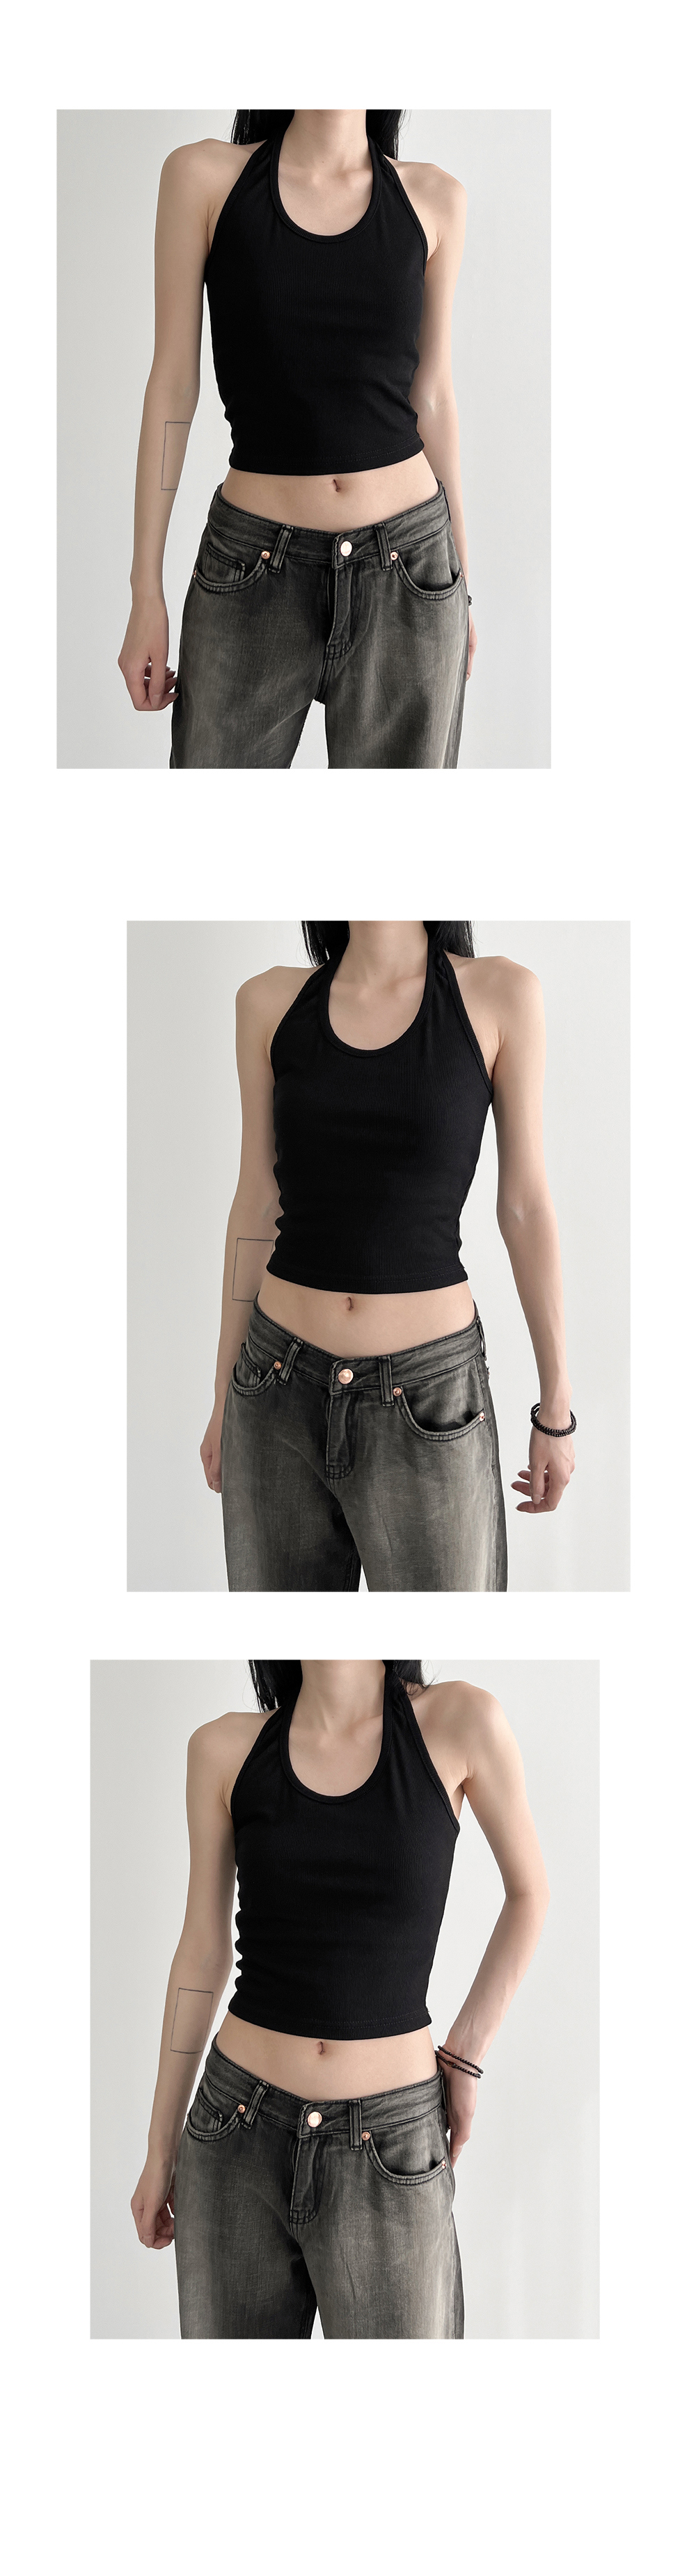 blouse model image-S1L12